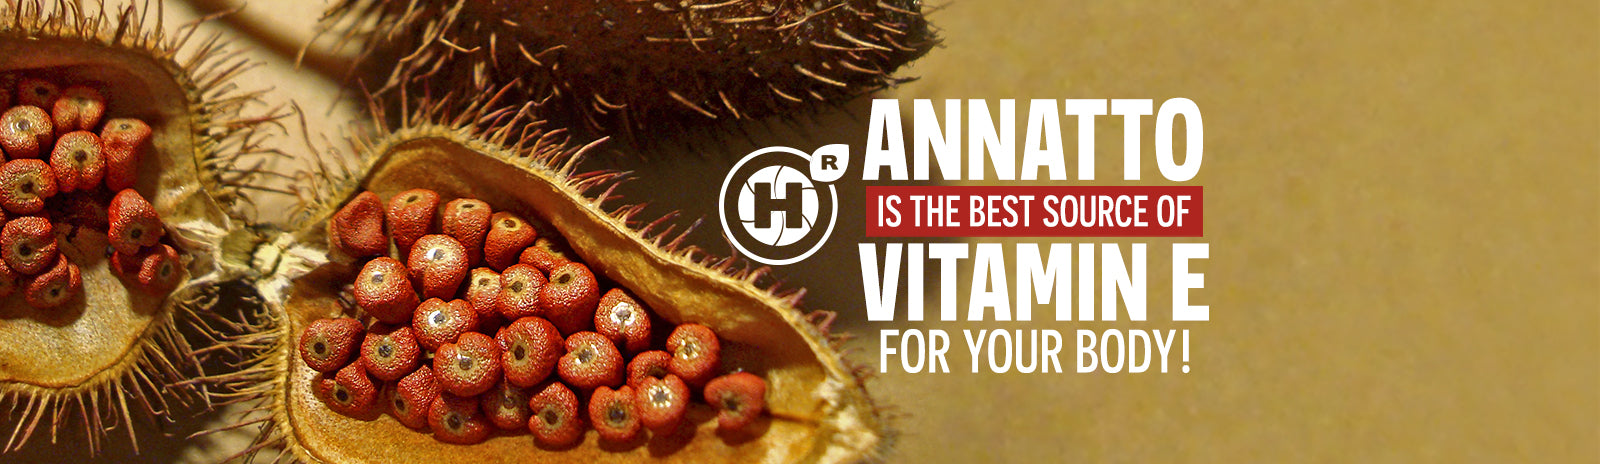 6 Reasons to supplement with Annatto Vitamin E